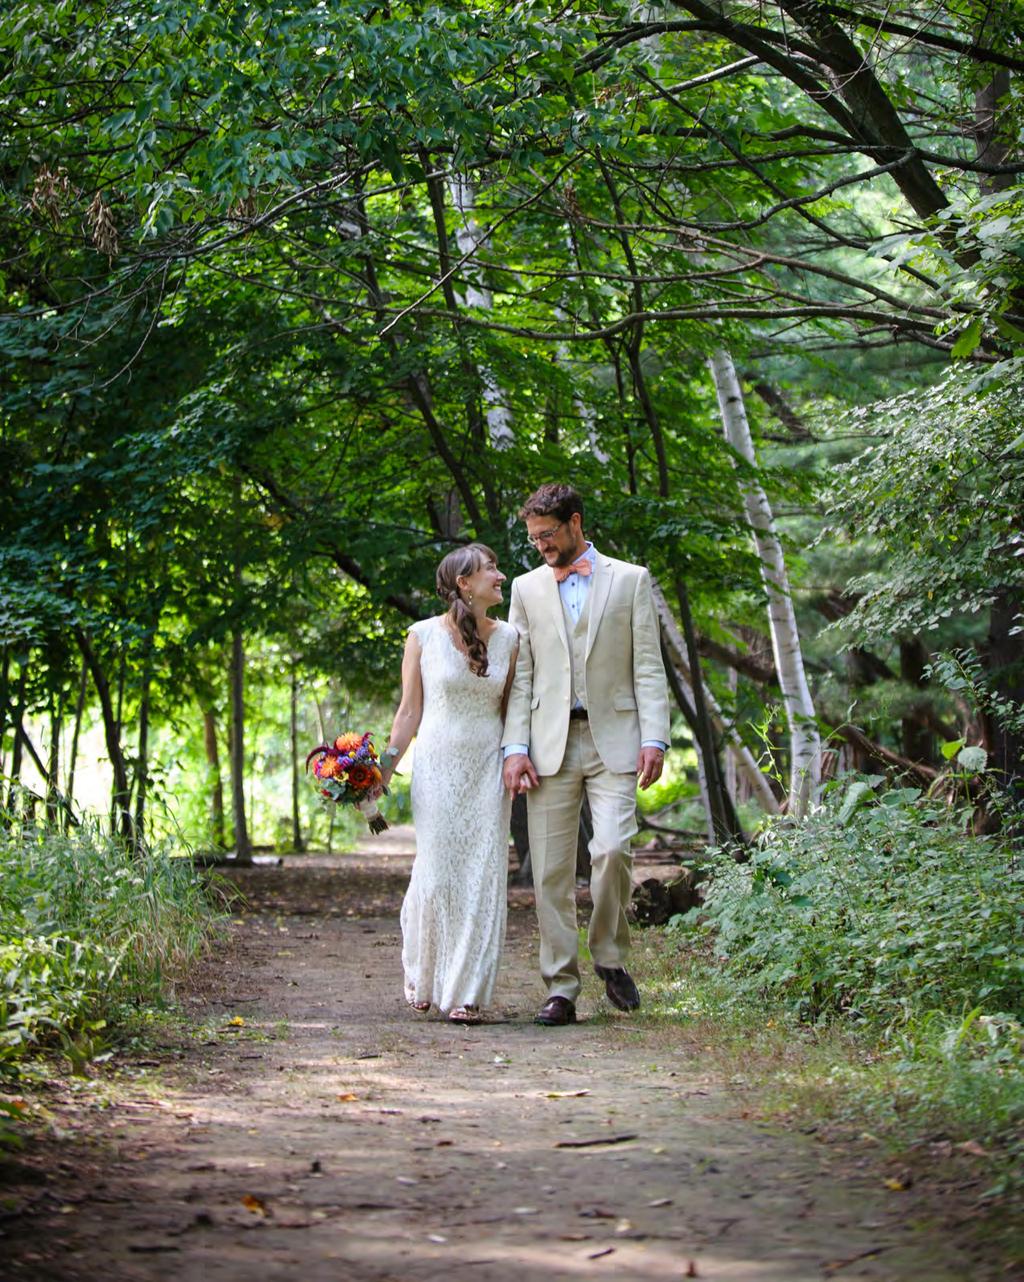 Weddings Aldo Leopold Nature Center For